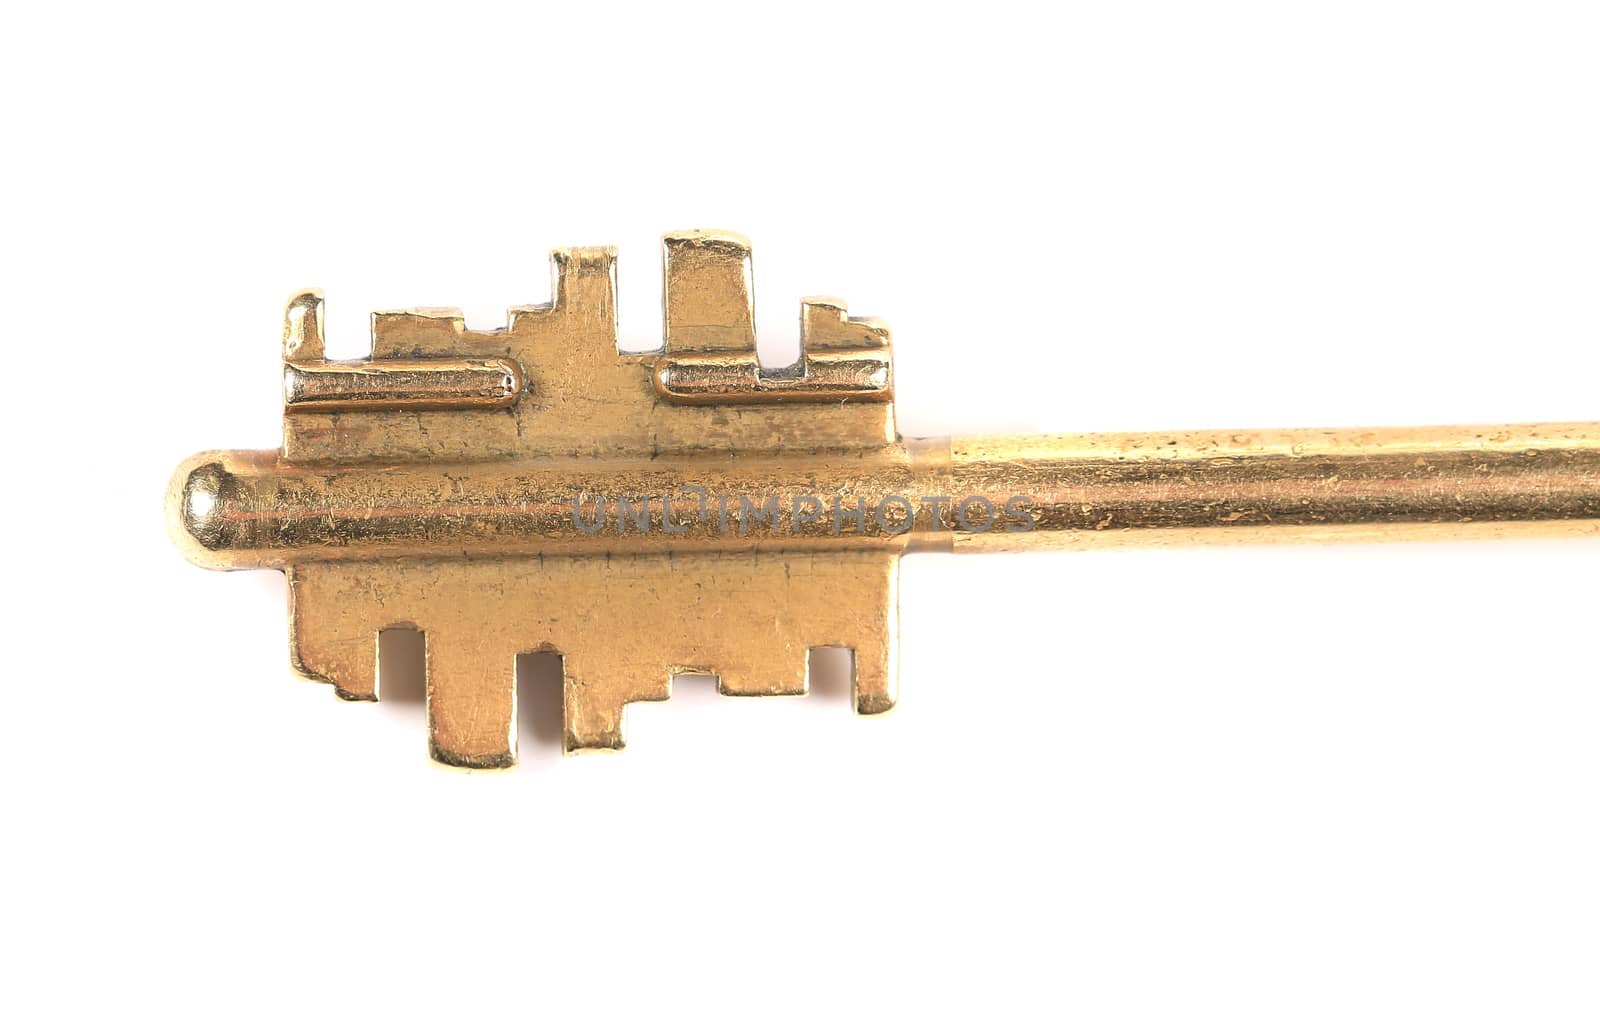 Head of bronze key. by indigolotos